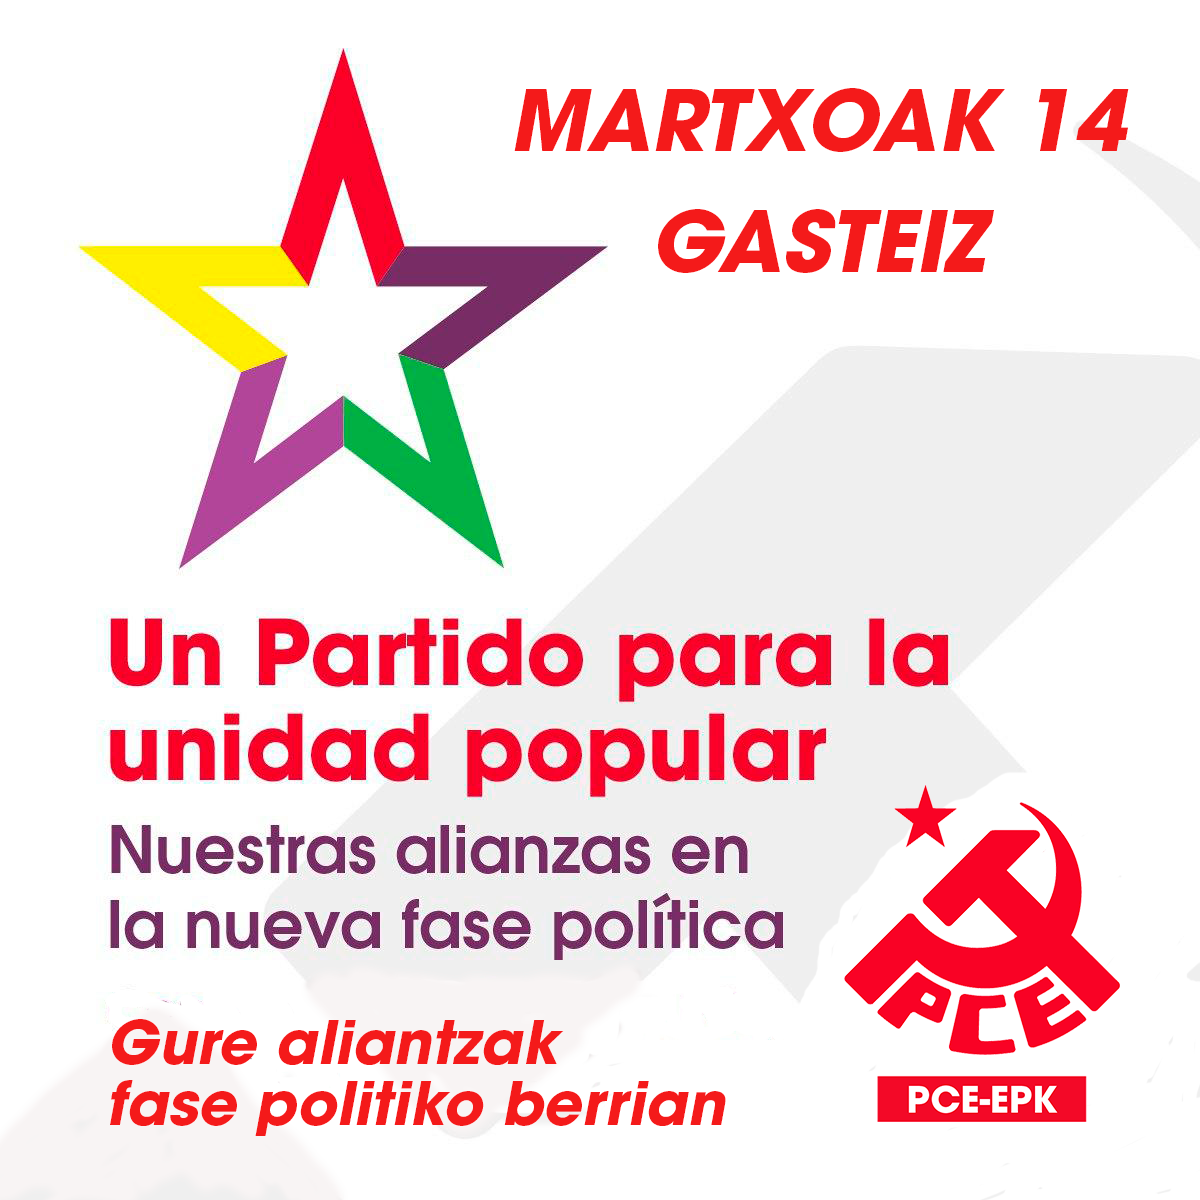 PCE-EPK Konferentzia Politikoa.  Un Partido para la Unidad Popular.